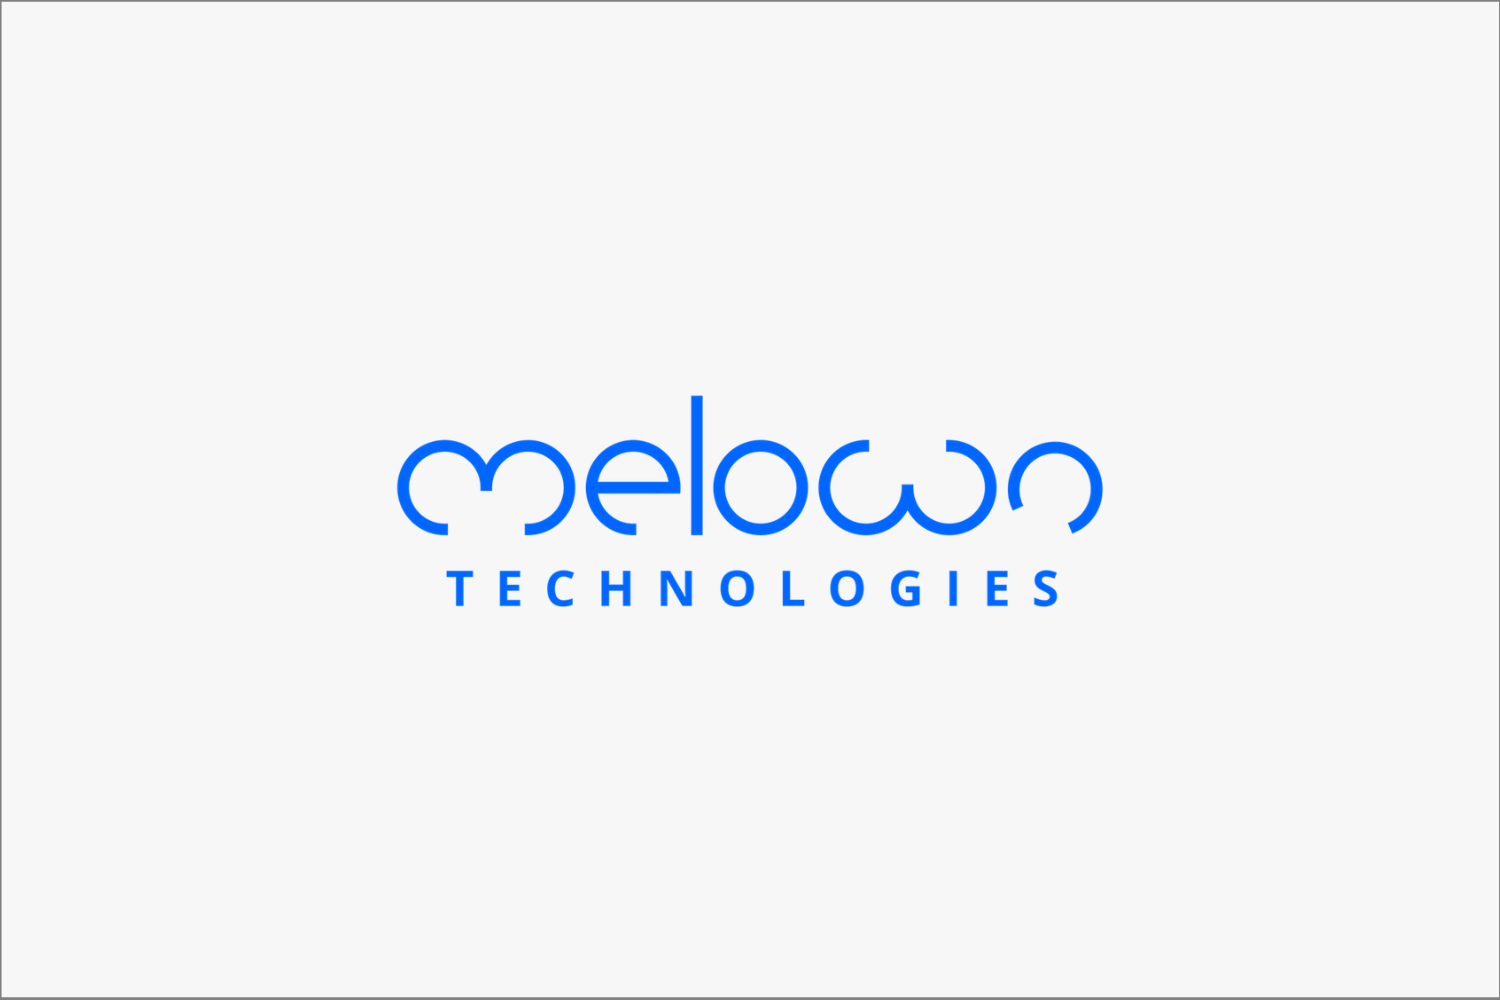 Melown Technologies